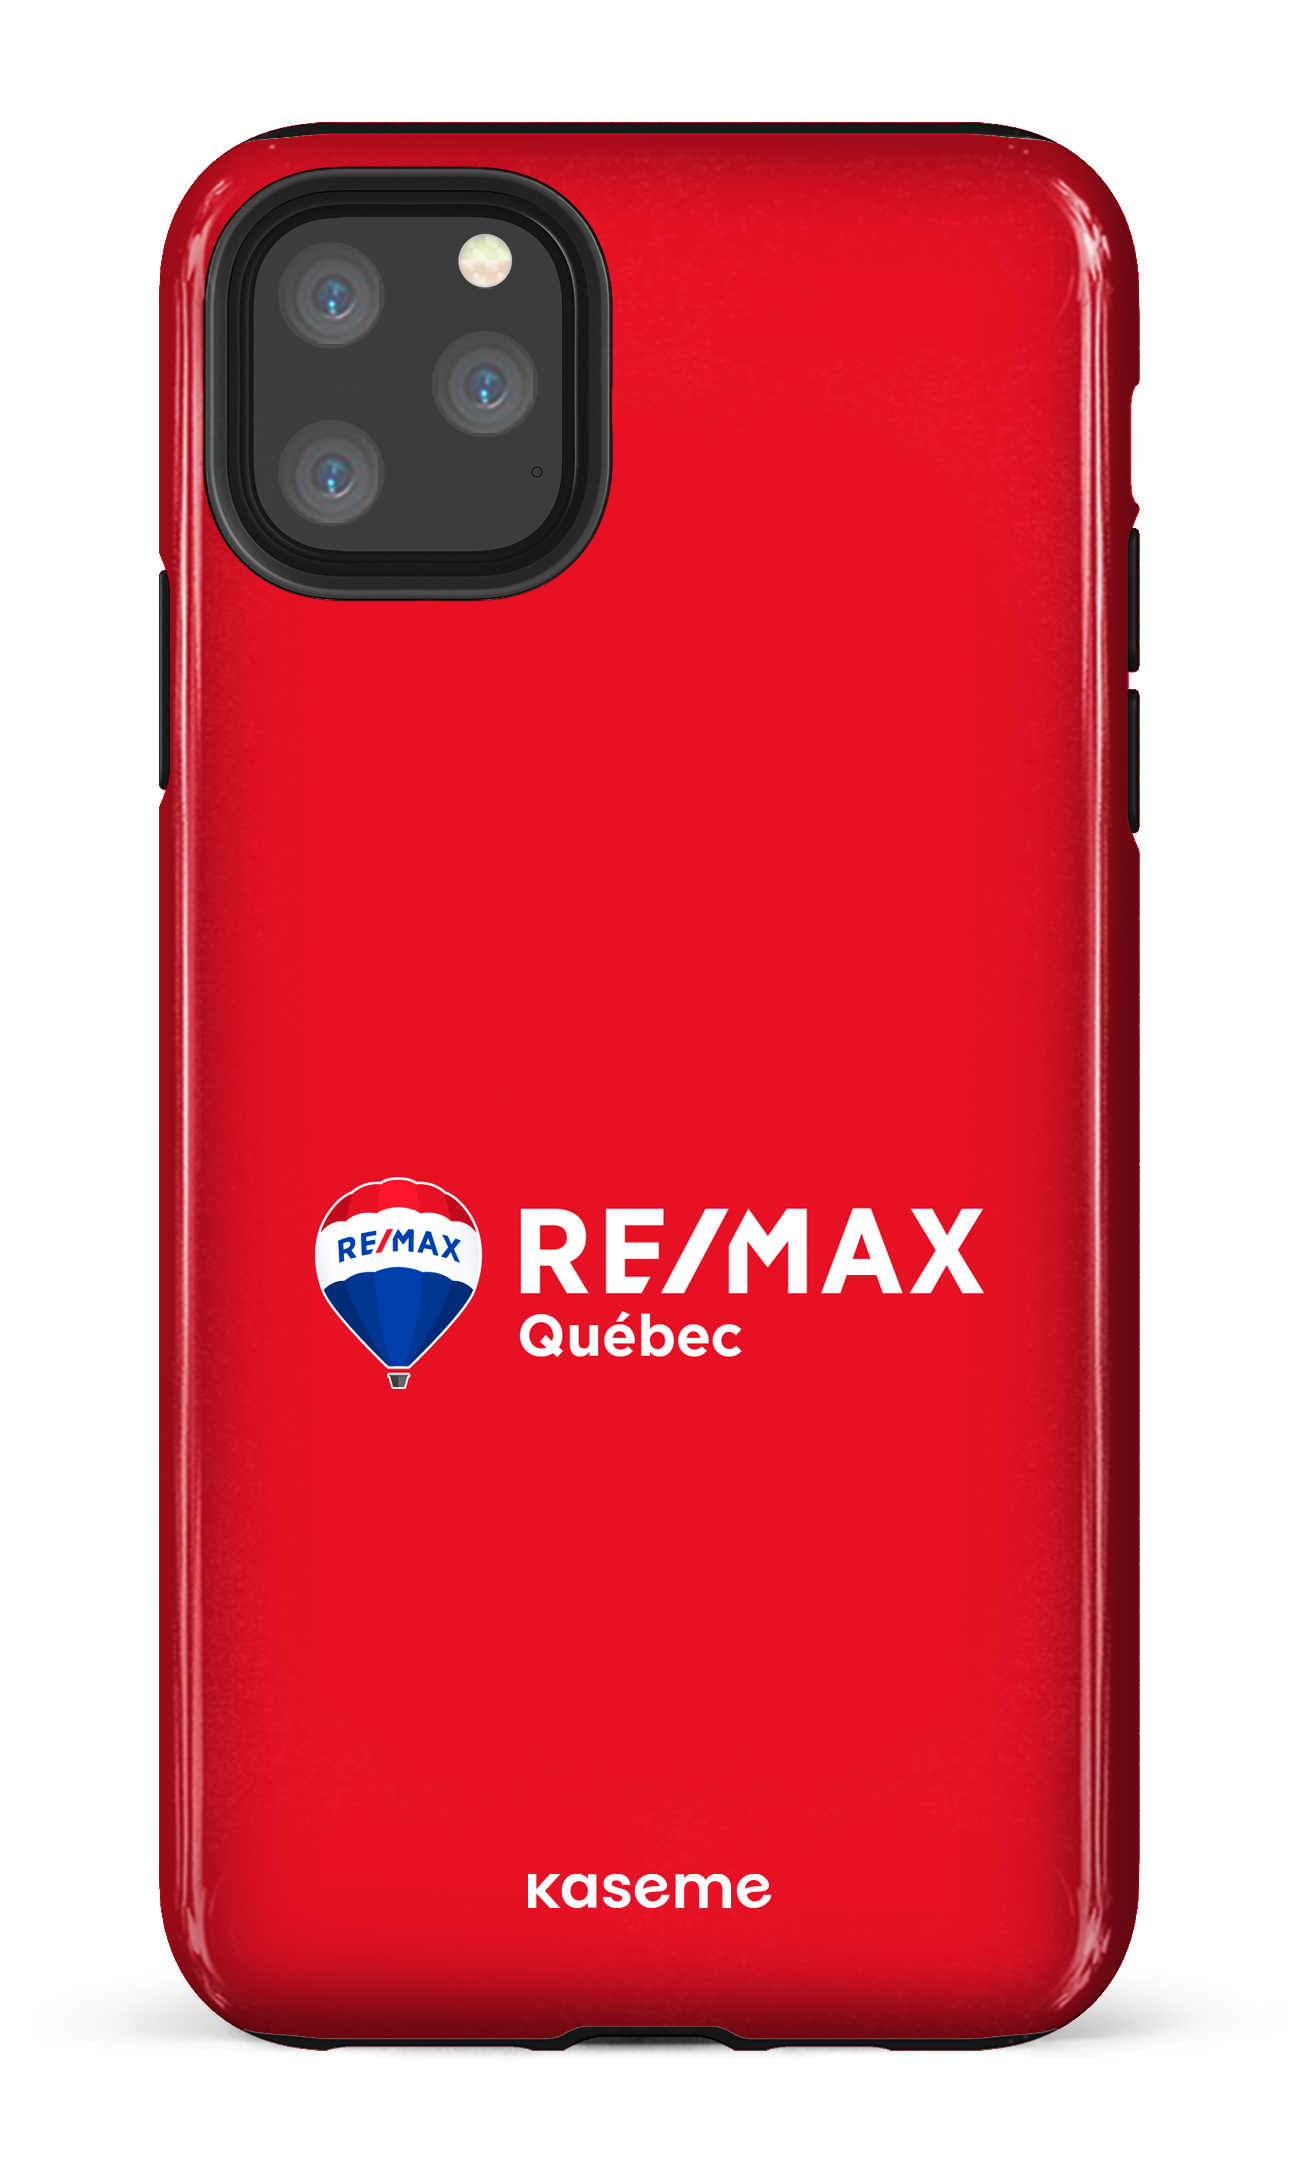 Remax Québec Rouge - iPhone 11 Pro Max